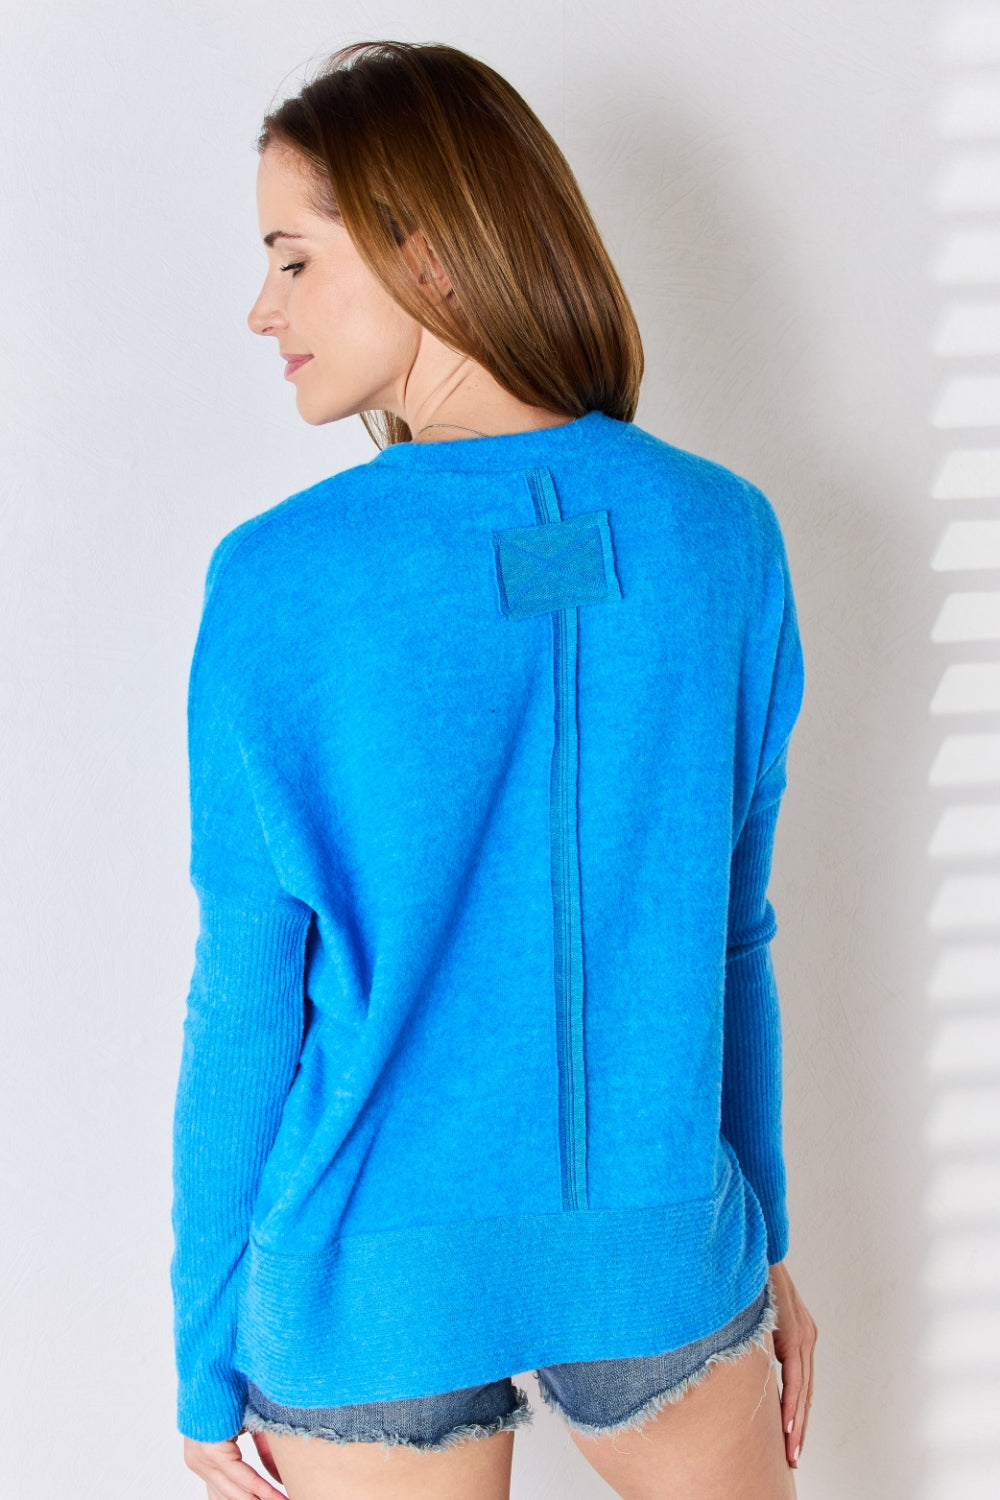 Brushed Melange Hacci Dolman Sleeve Sweater